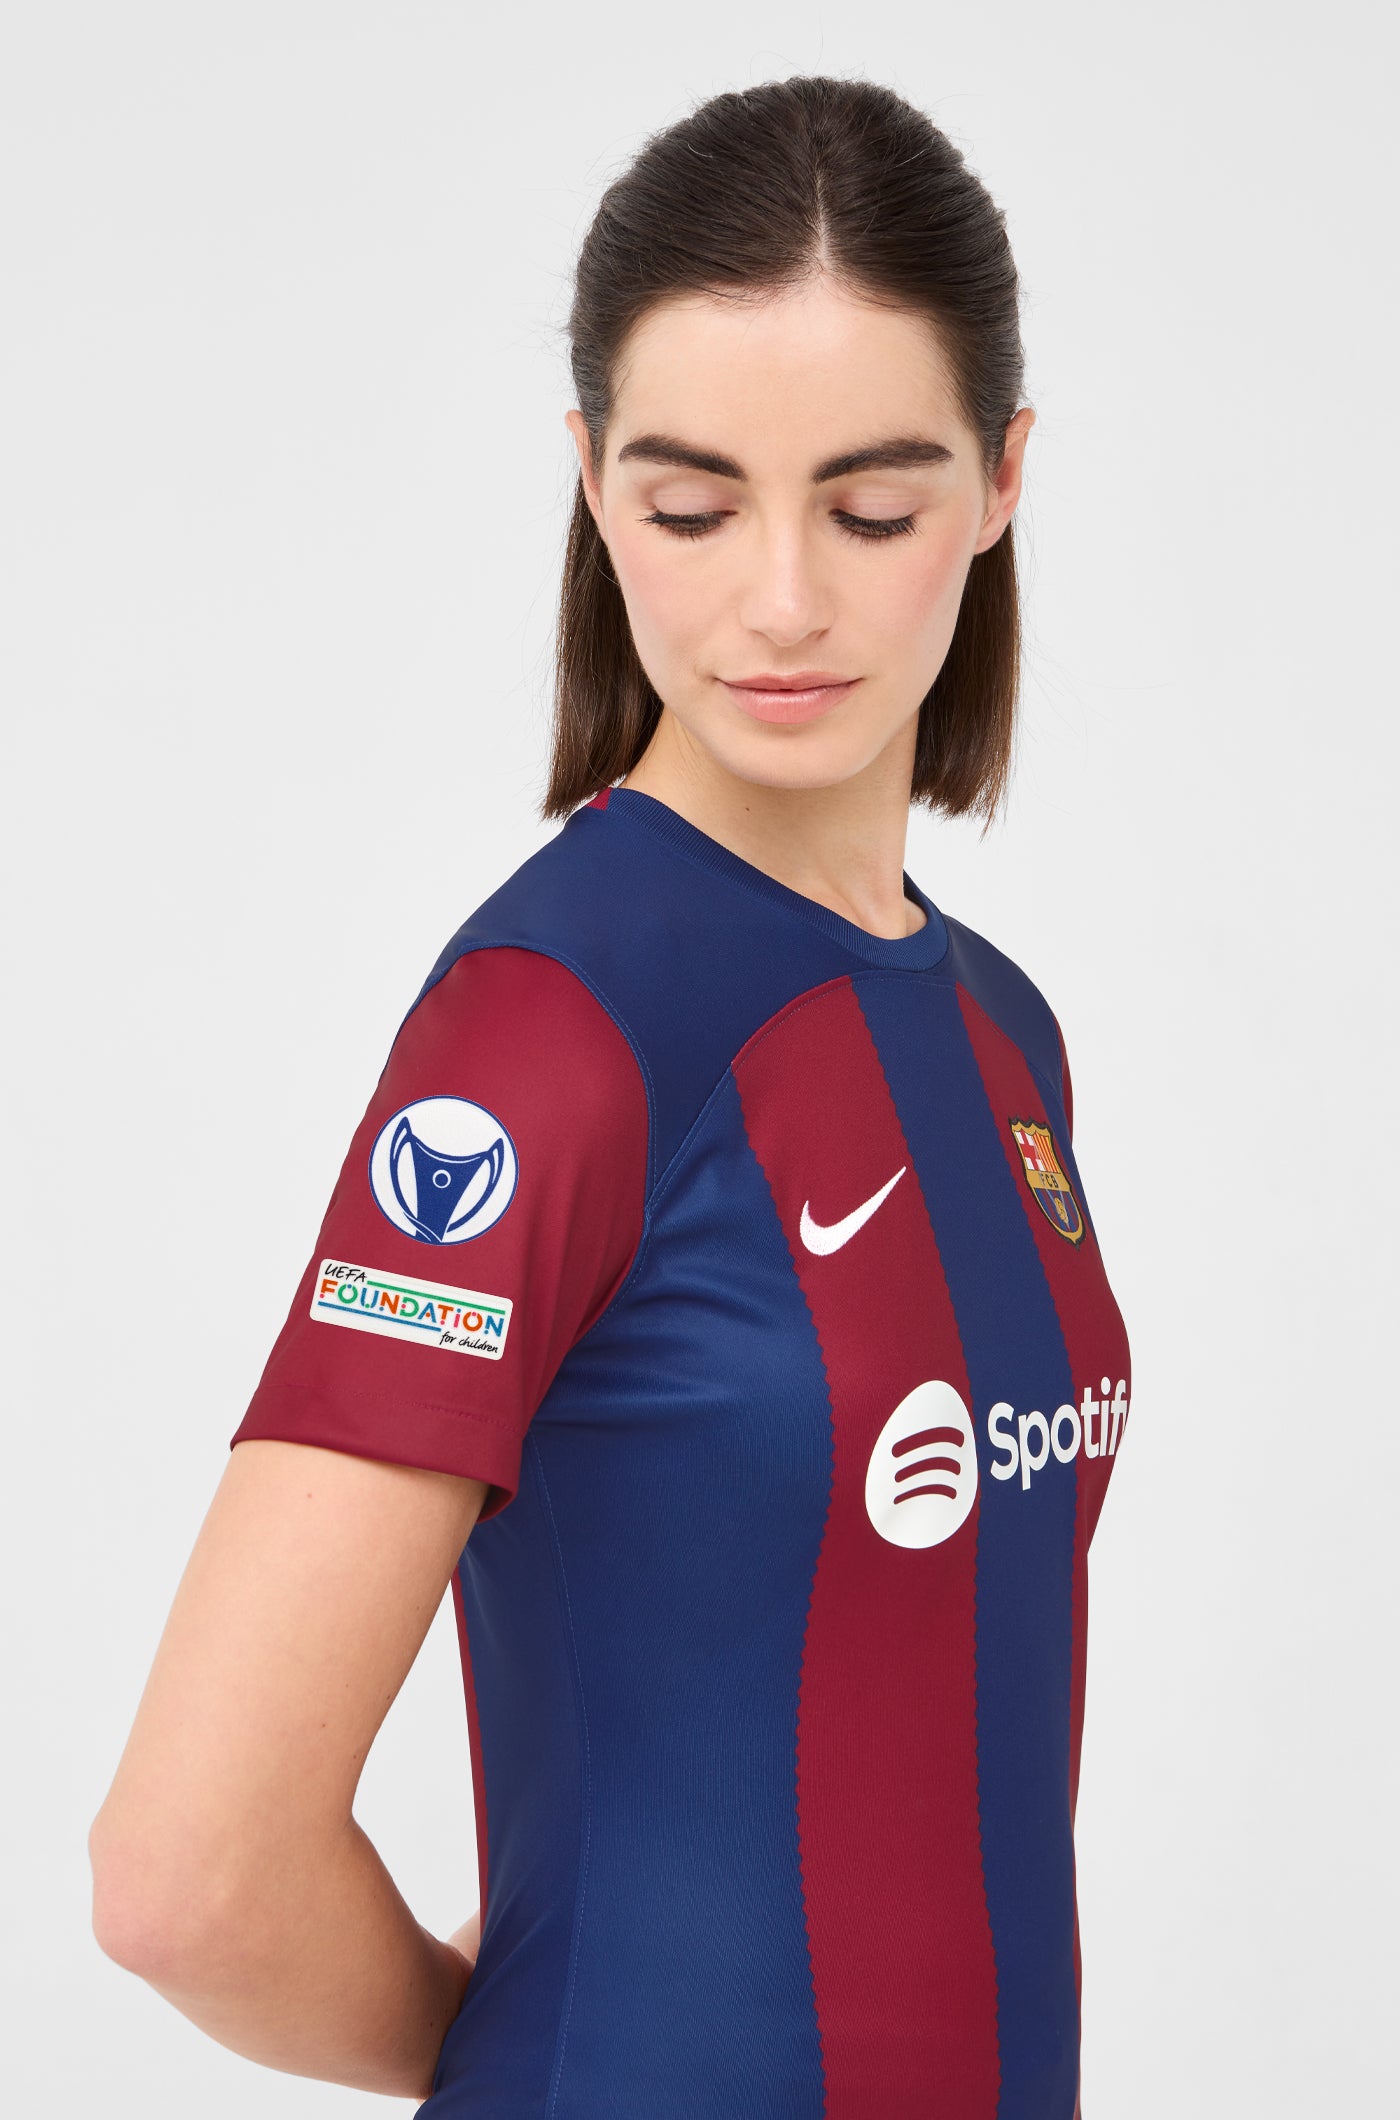 UWCL FC Barcelona home shirt 23/24 - Women - MARTA